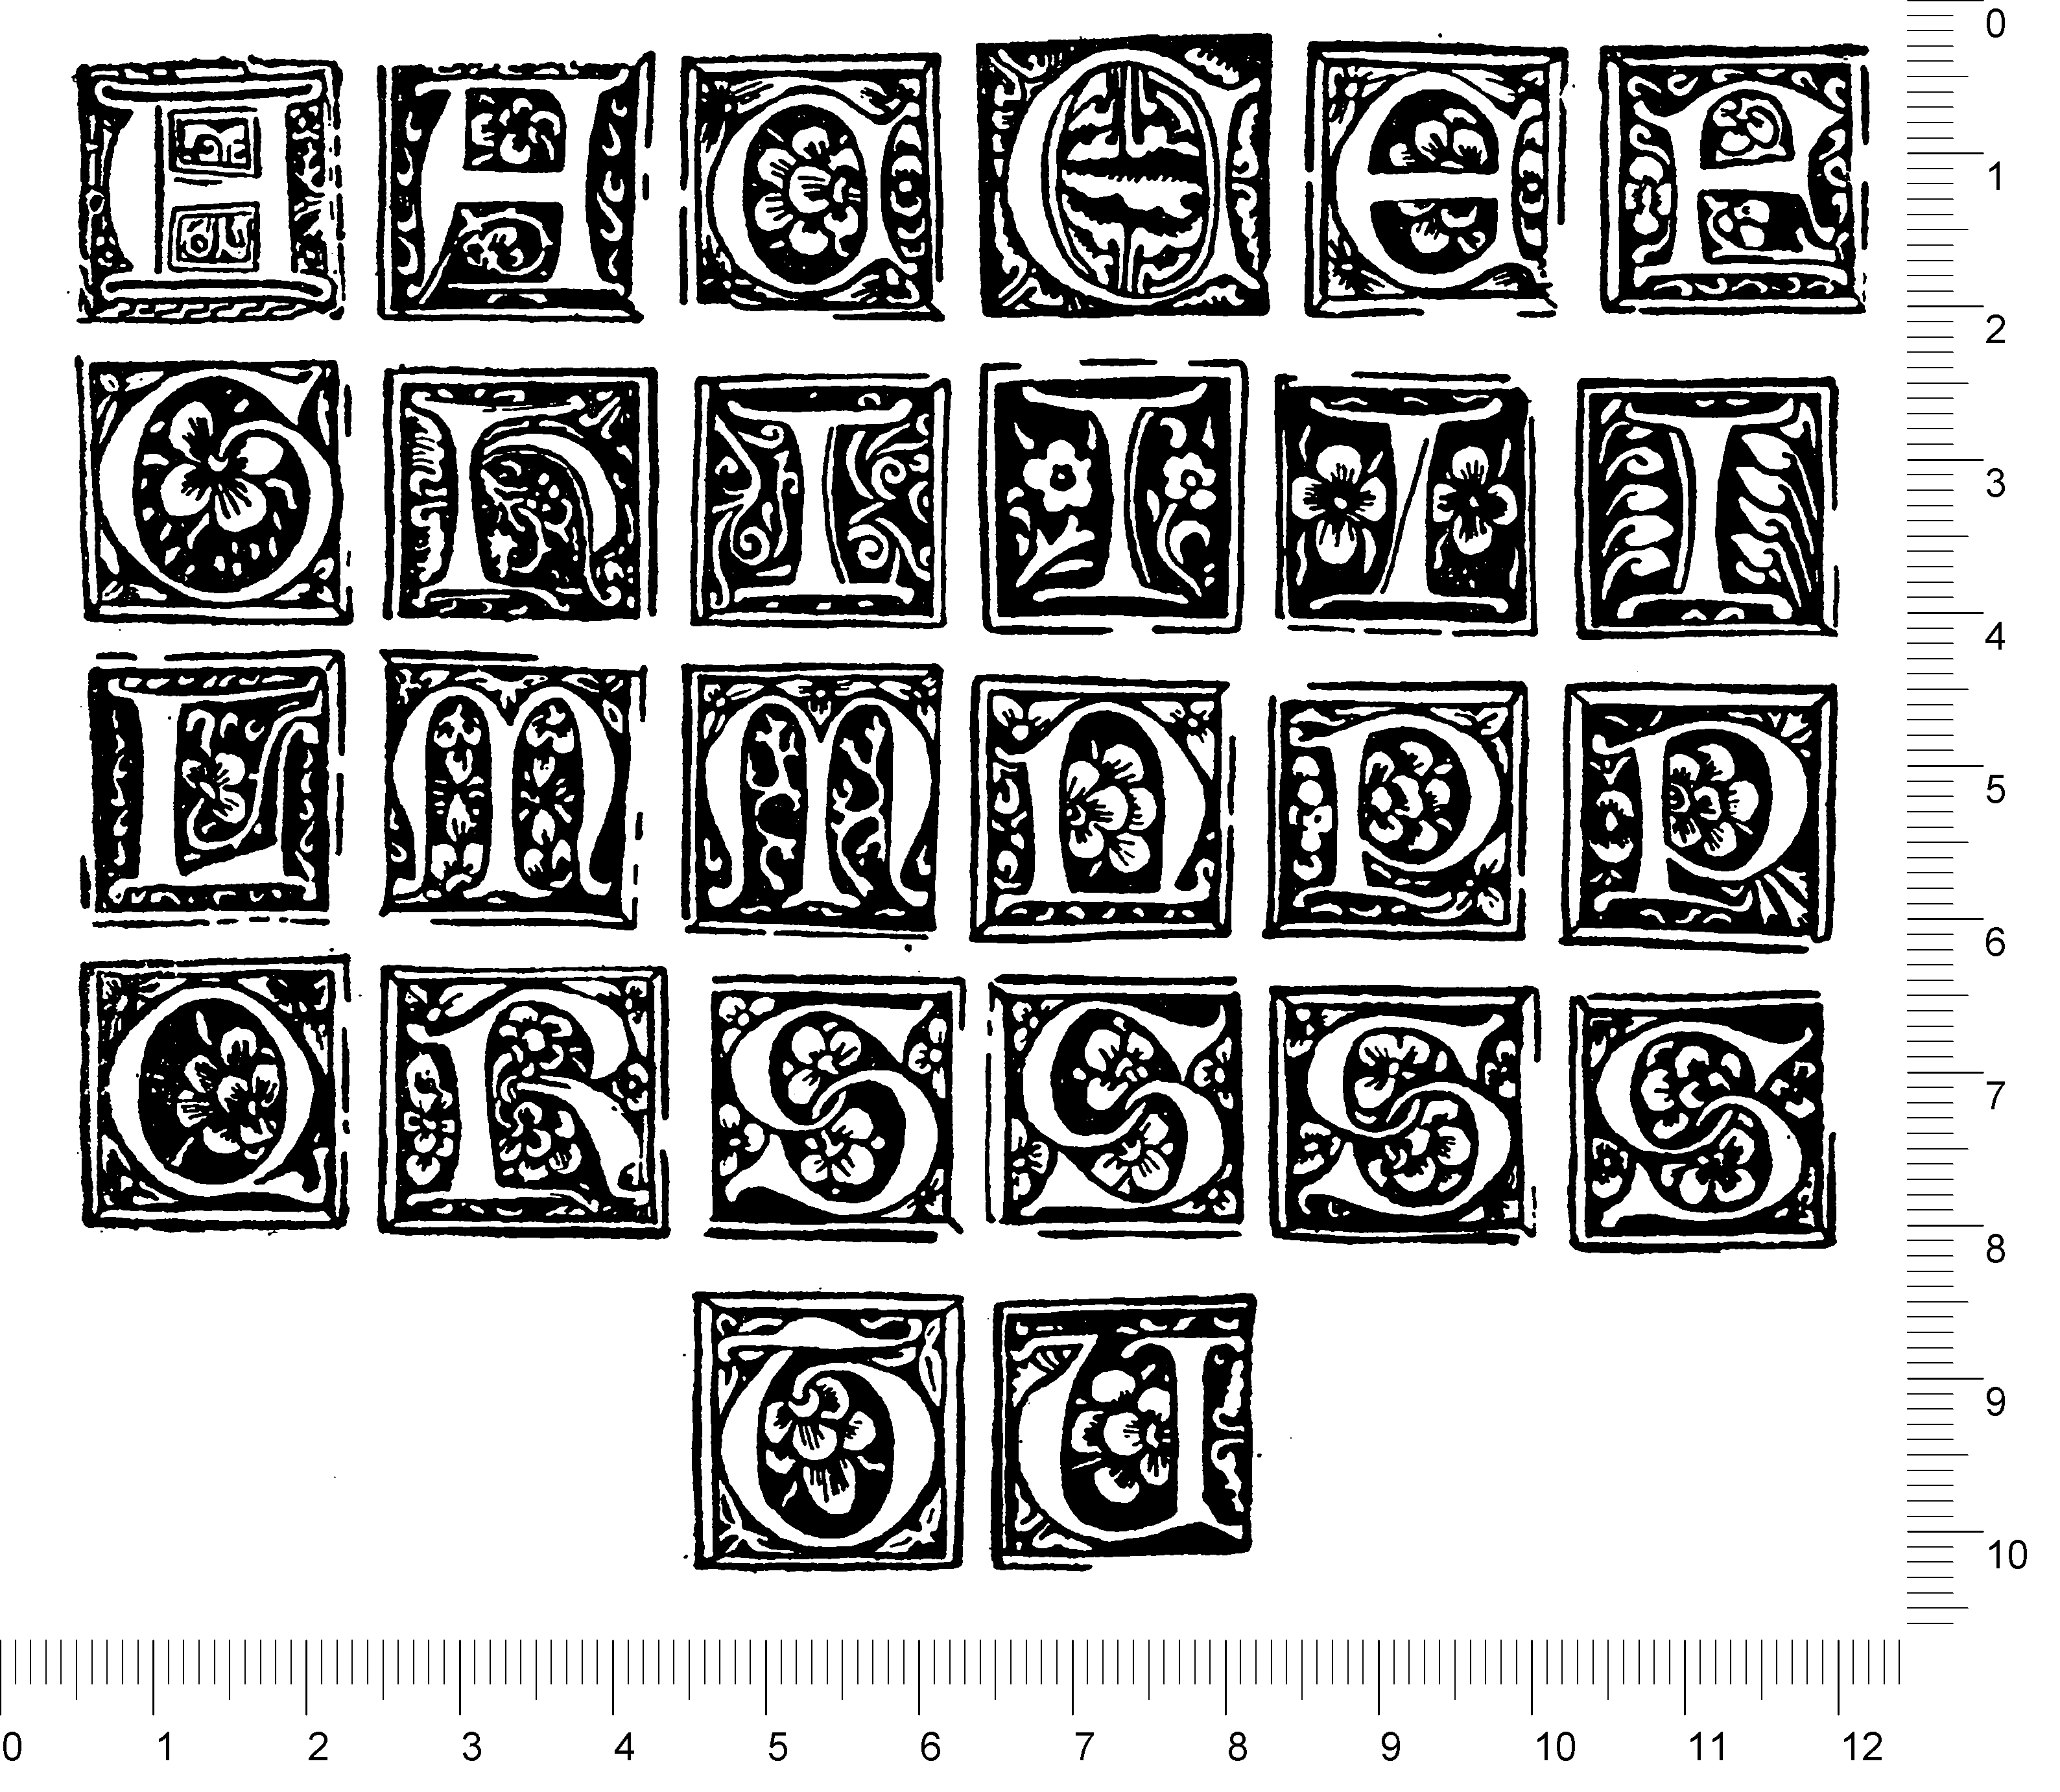 Abbildung der GfT-Tafeln vonGfT1435.1